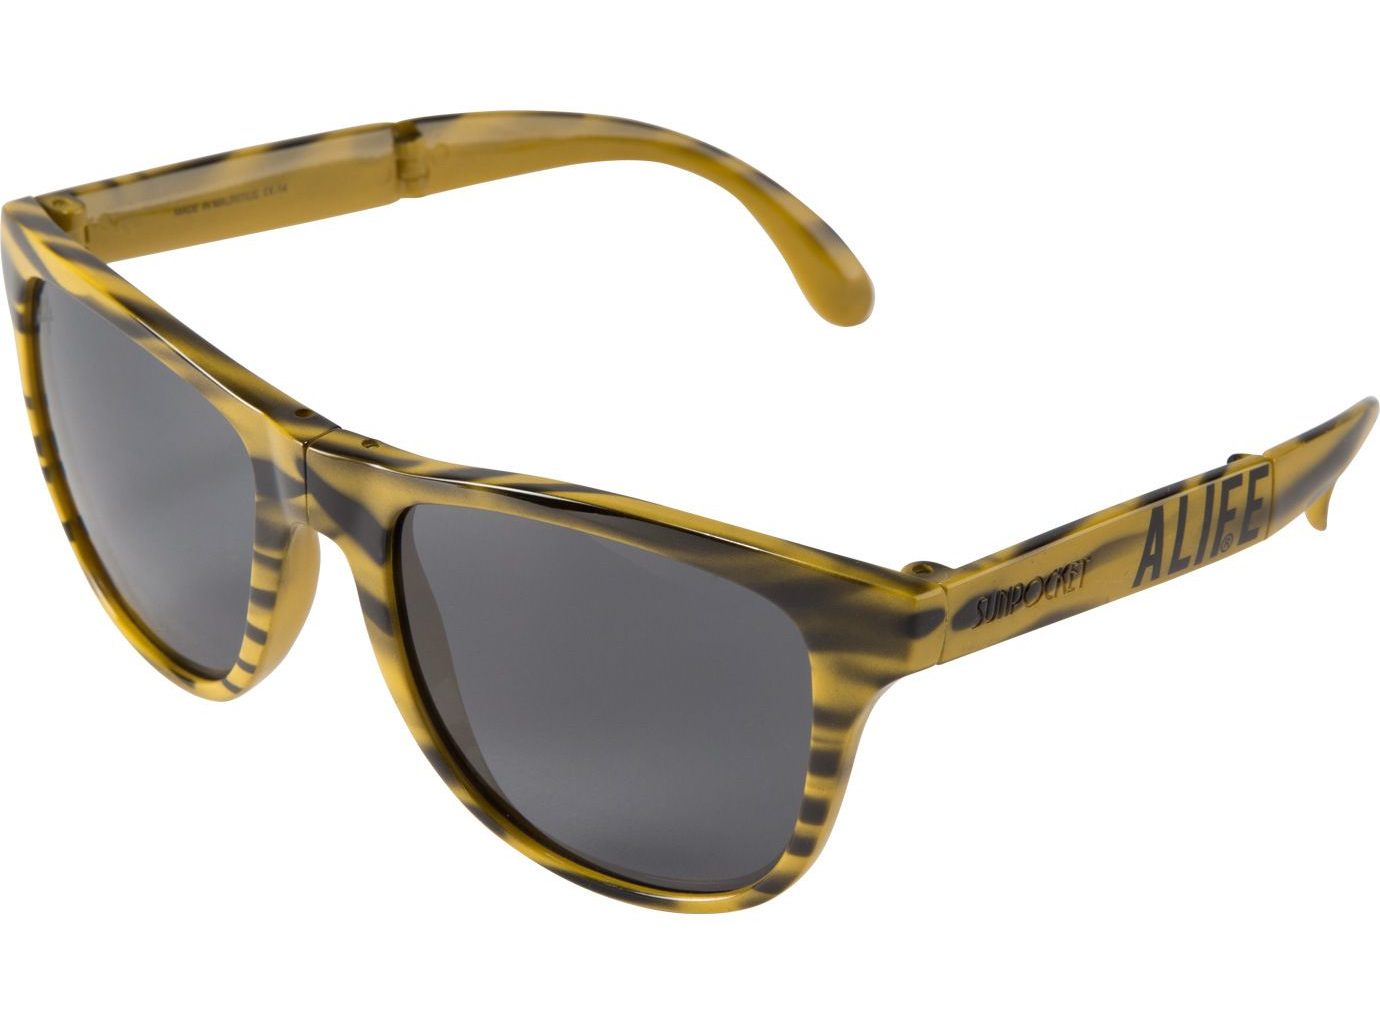 Sunpockets Sunglasses - Add to Your Fashion Accessories